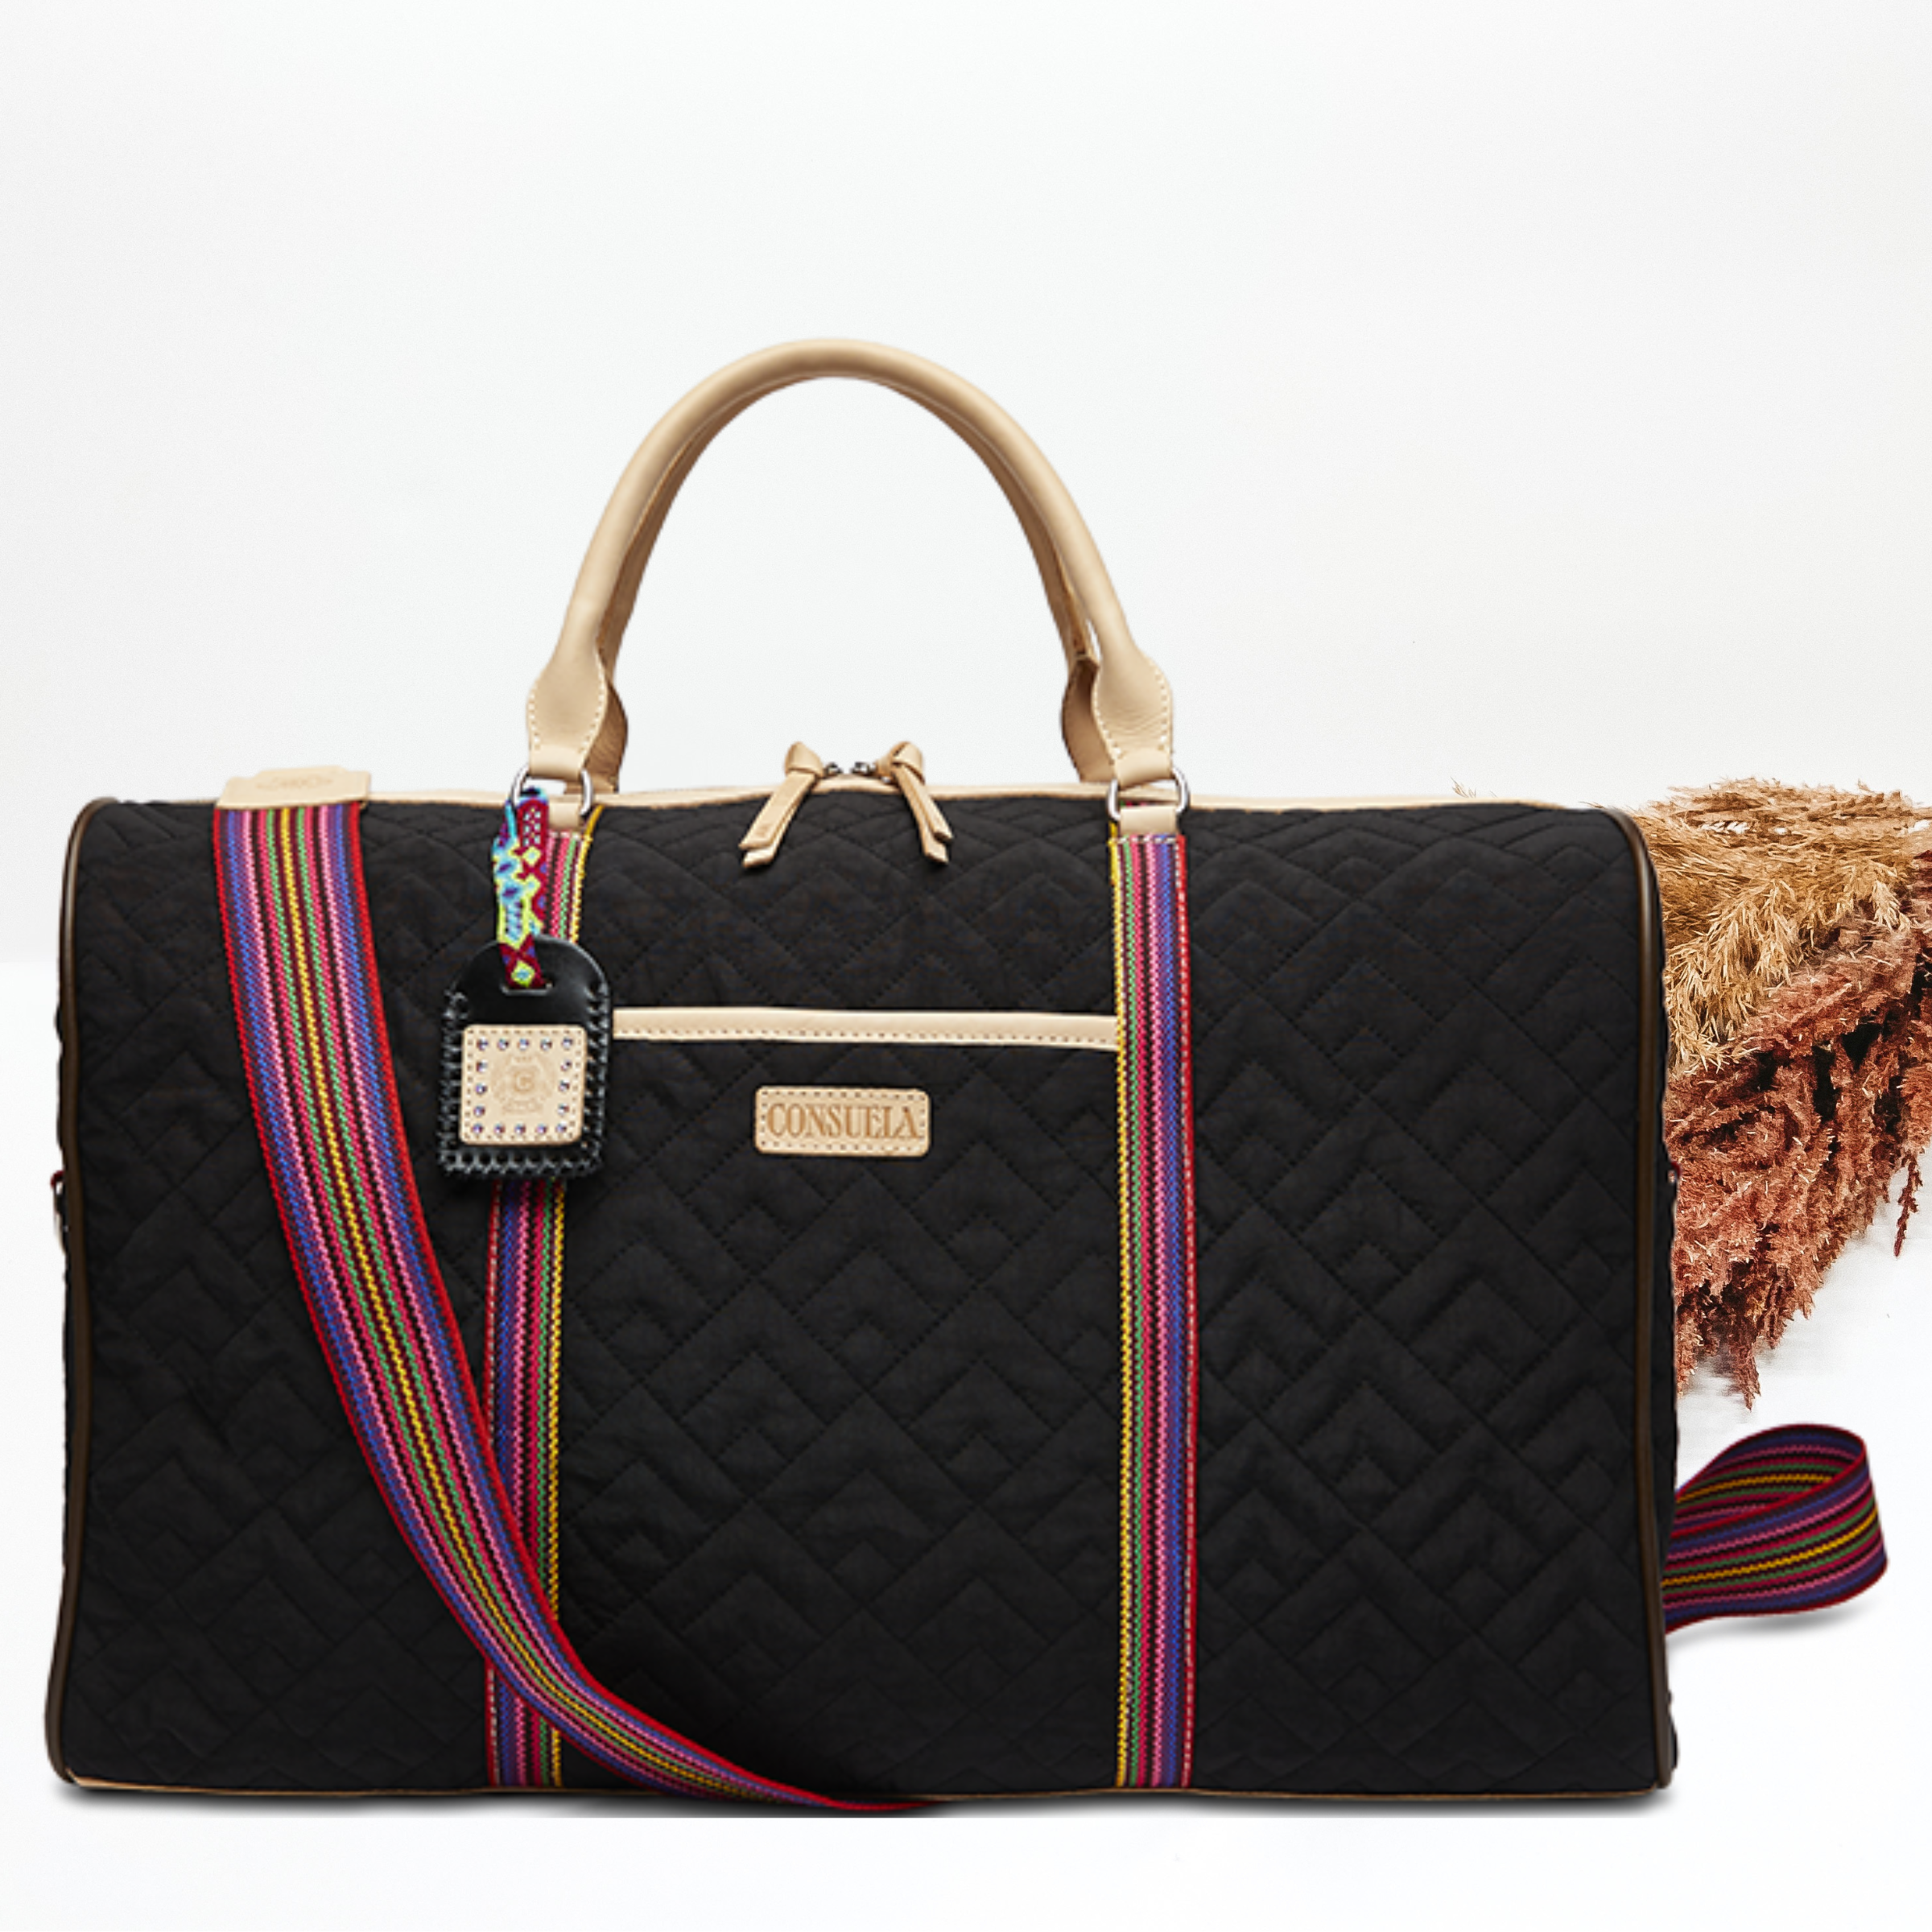 Consuela | Meg Weekender Bag - Giddy Up Glamour Boutique